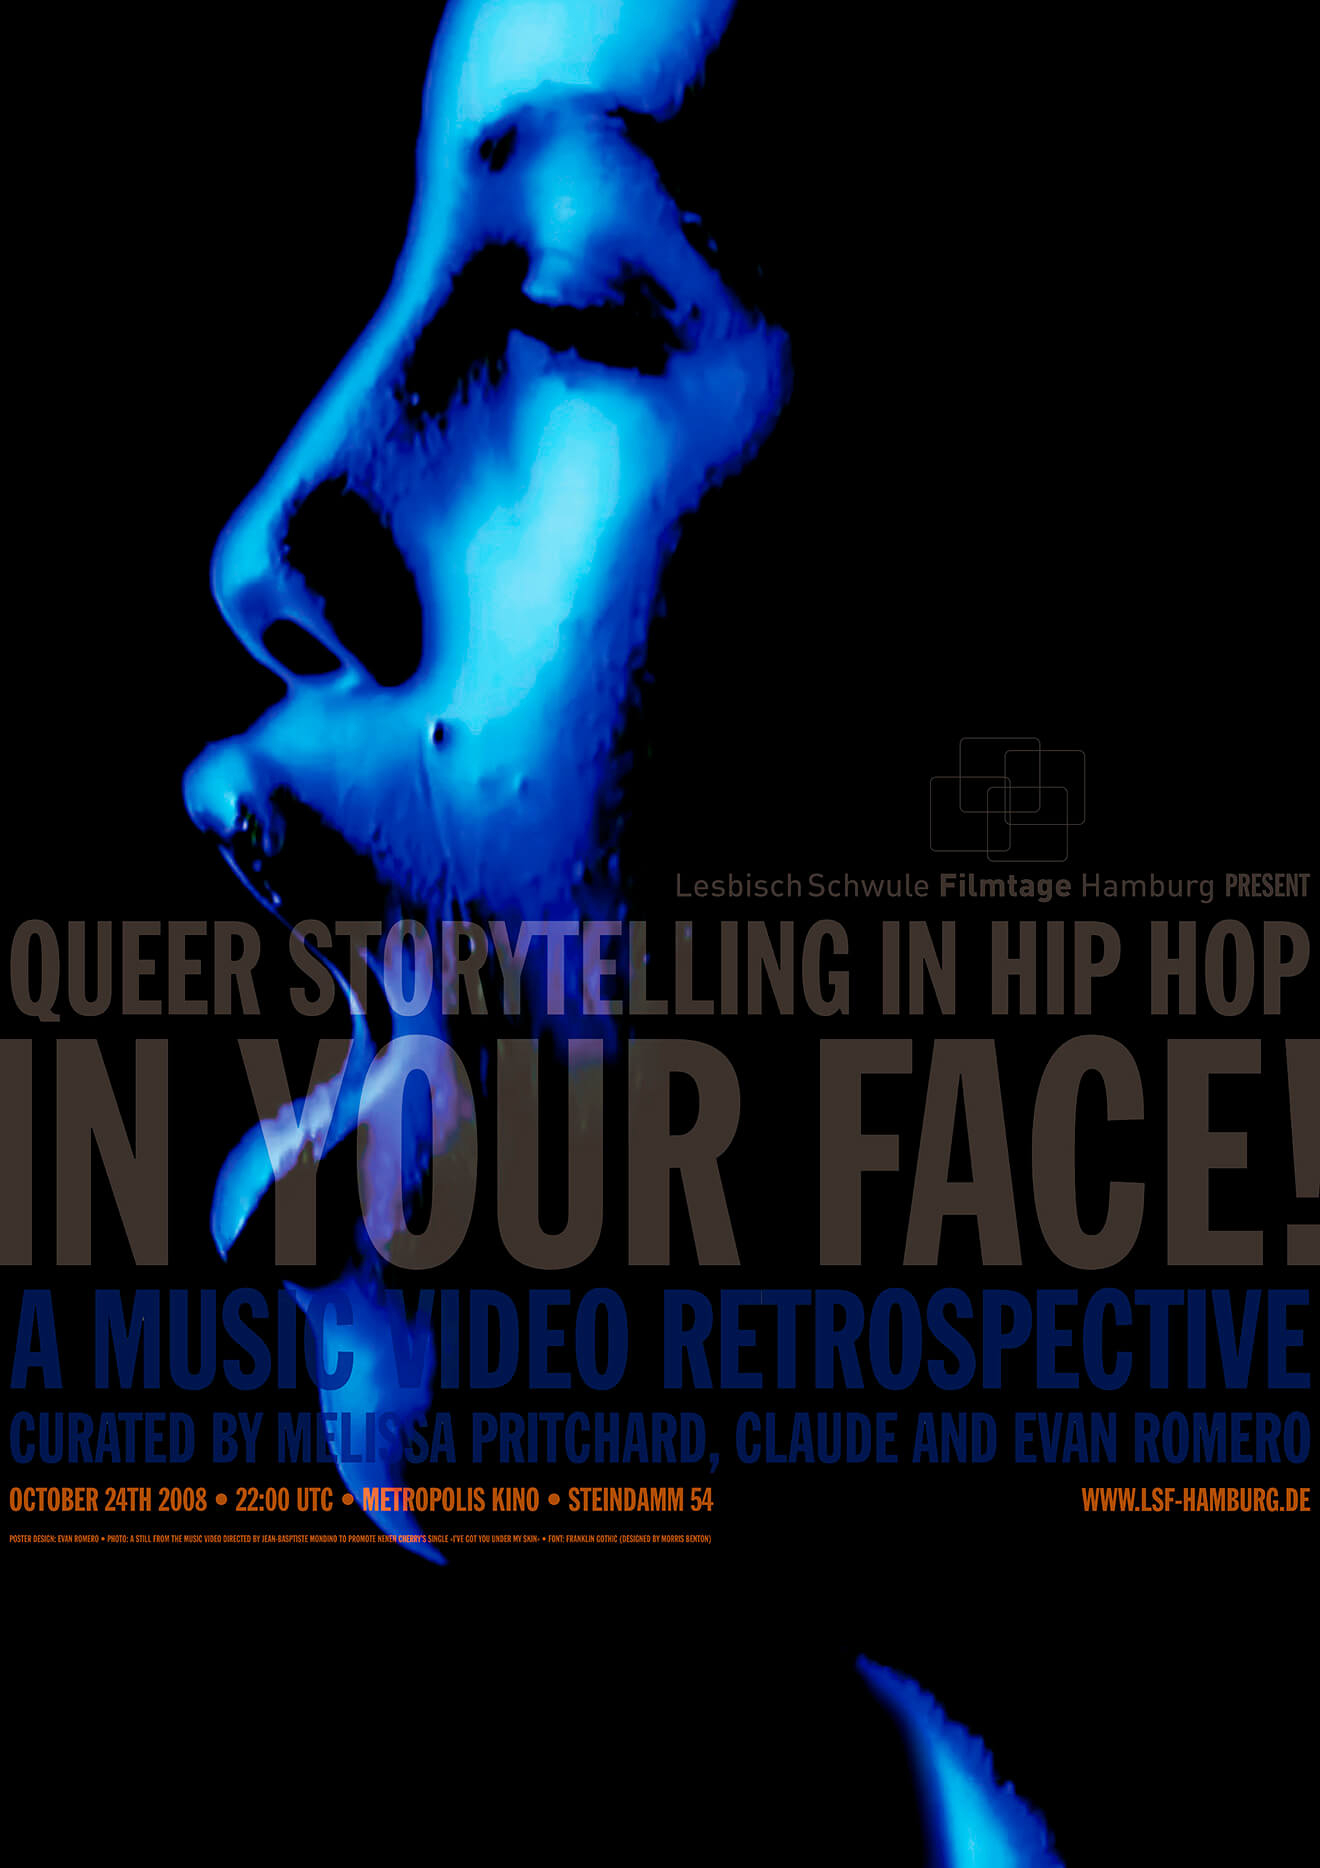 Afiche promocional de la retrospectiva “In your face!”